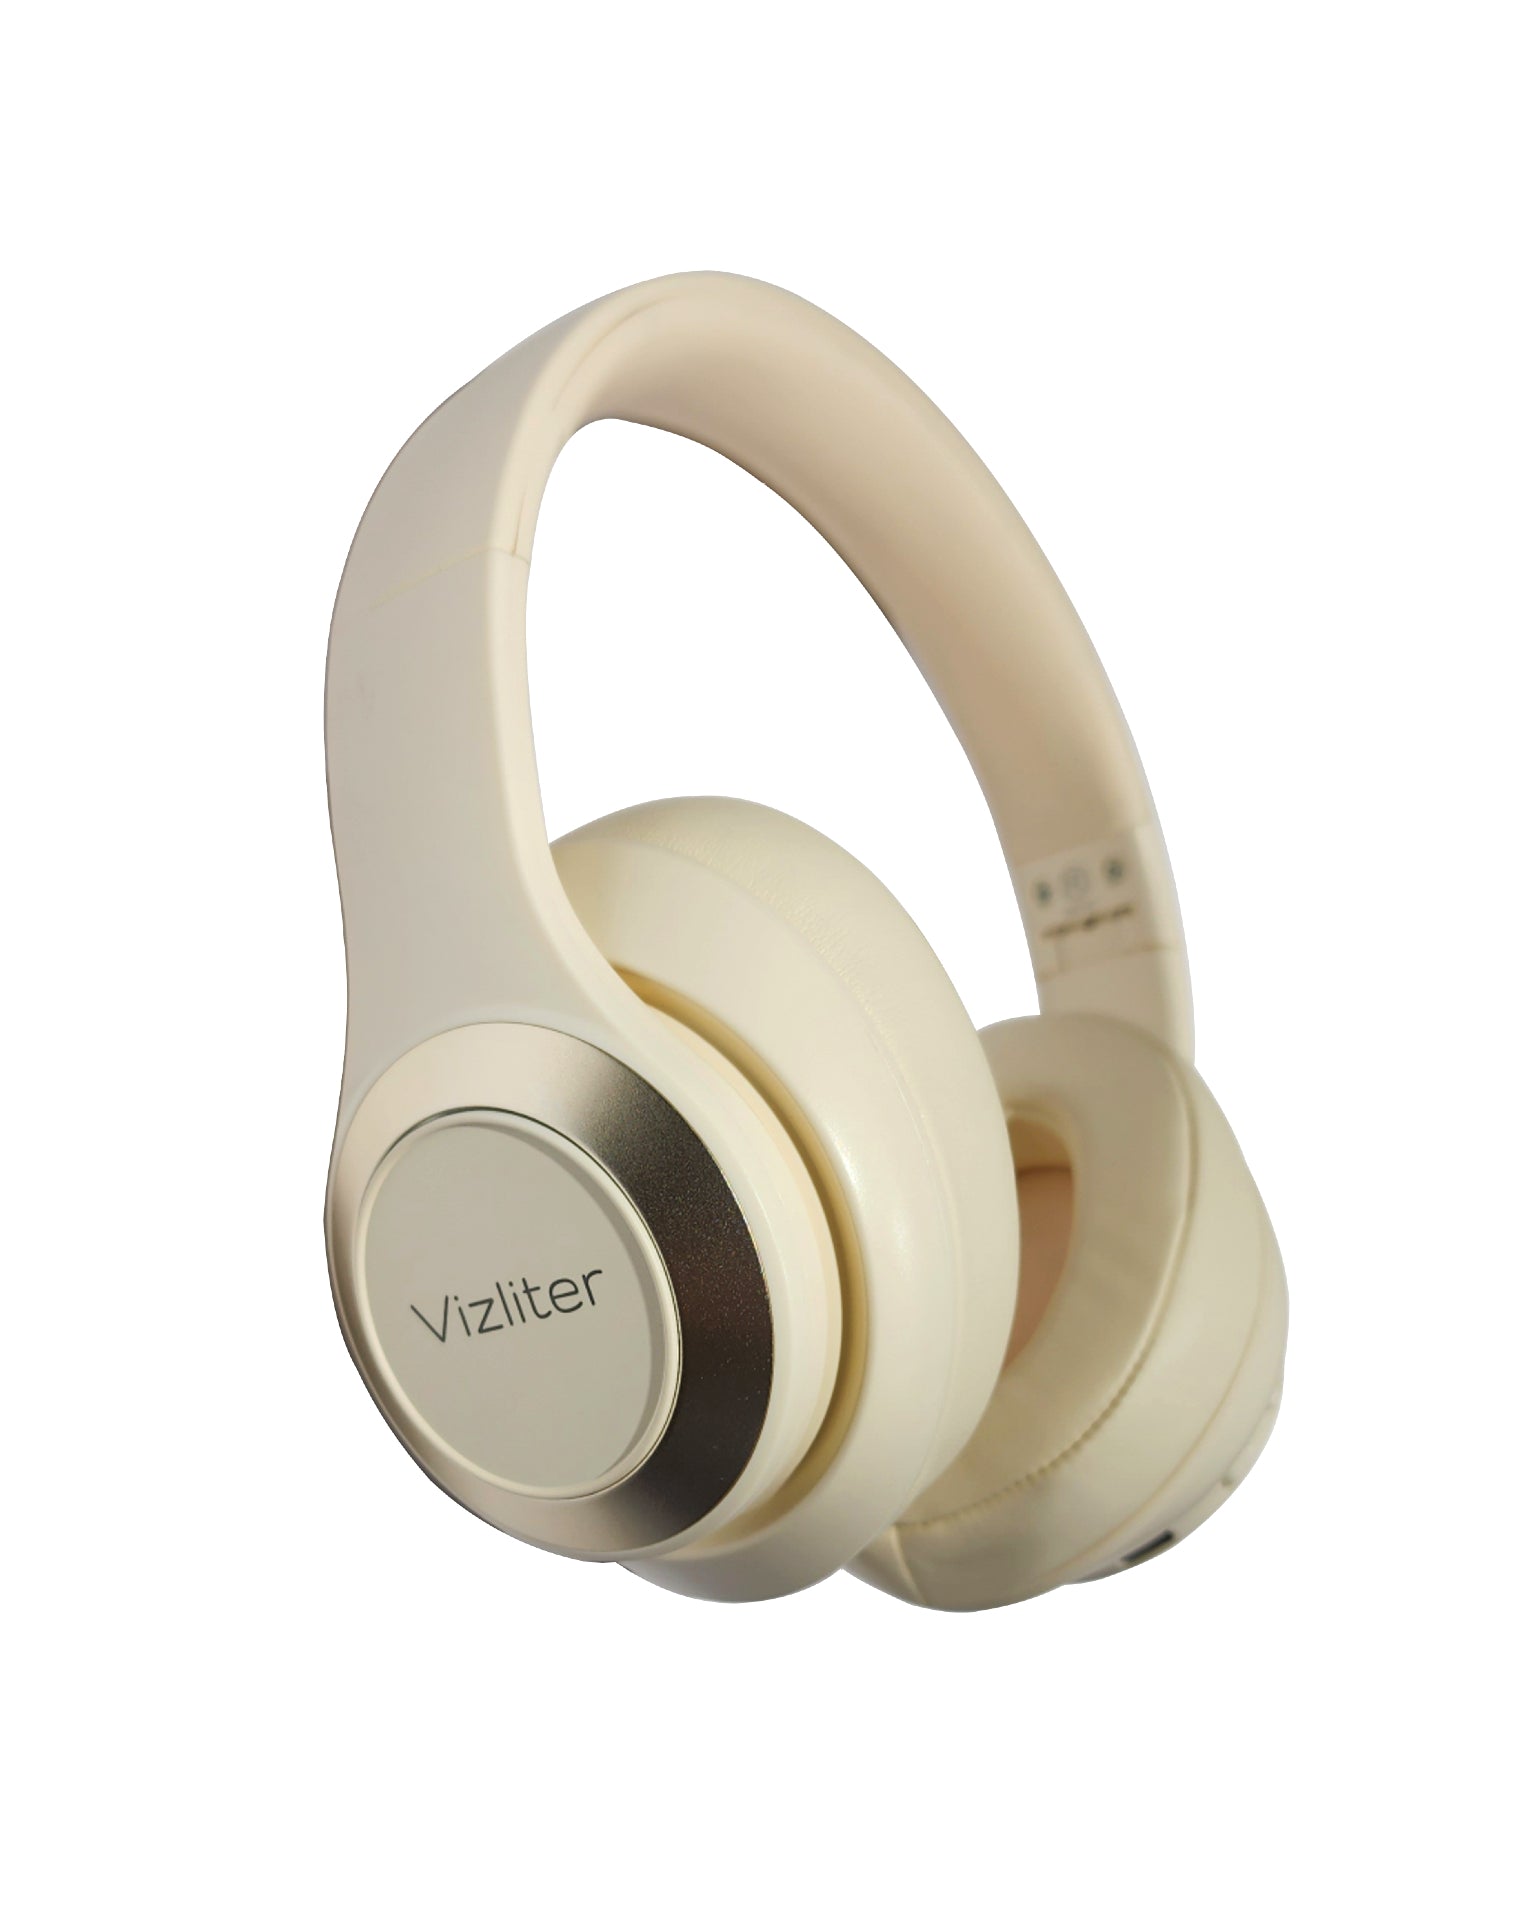 Vizliter Bluetooth Headphones, TWS Deep Bass Wireless Over-Ear Headset 5.0 with Built-in Mic LED Lights, Noise Cancelling Beige